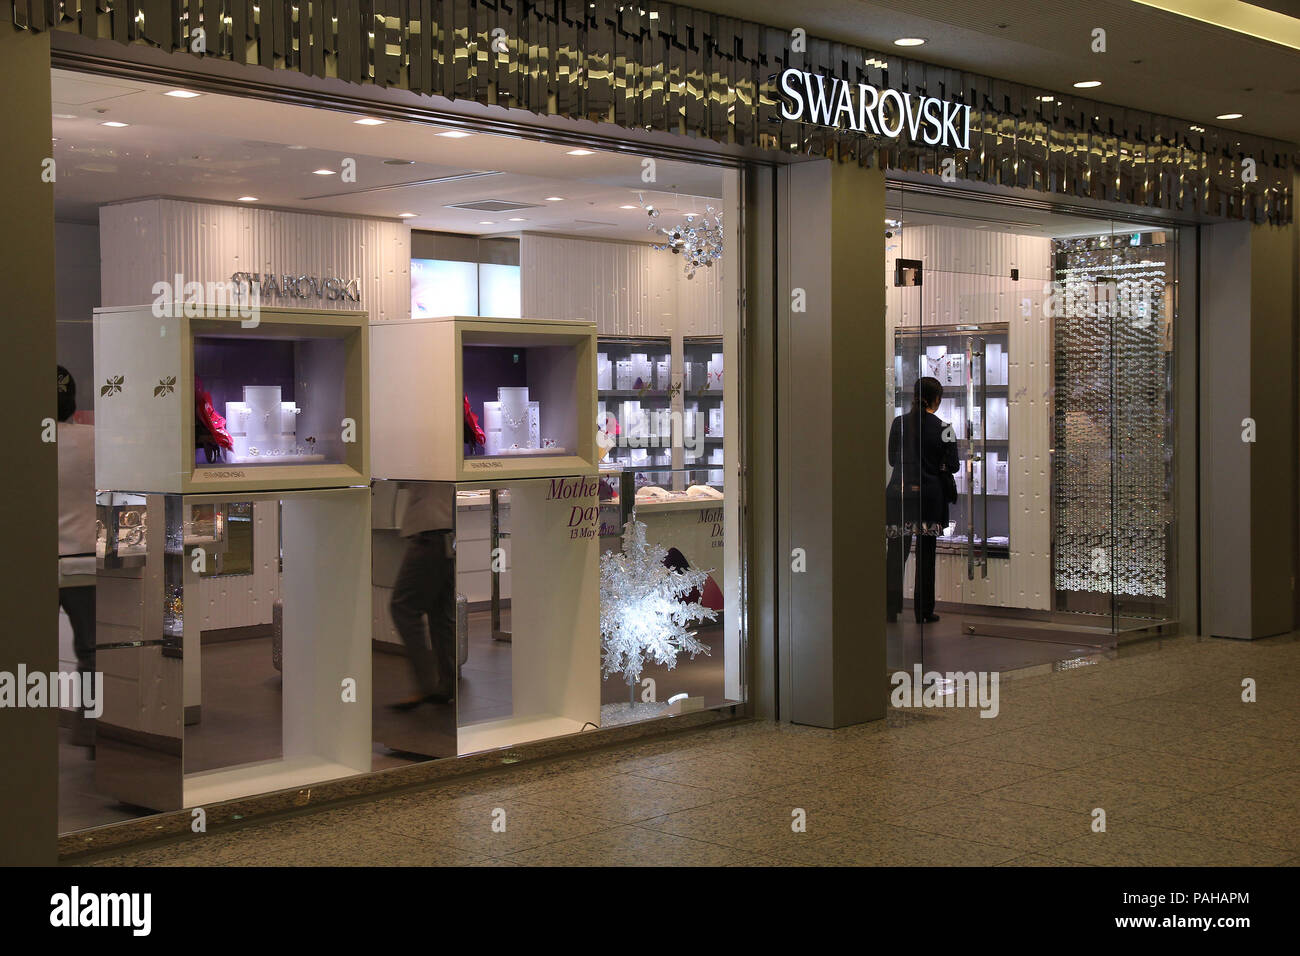 YOKOHAMA, Japan - 10. Mai: Swarovski Stores am 10. Mai 2012 in Yokohama, Japan. Marke Swarovski besteht seit 1895 und hat 24,841 Mitarbeiter (Dez. 2009). Stockfoto